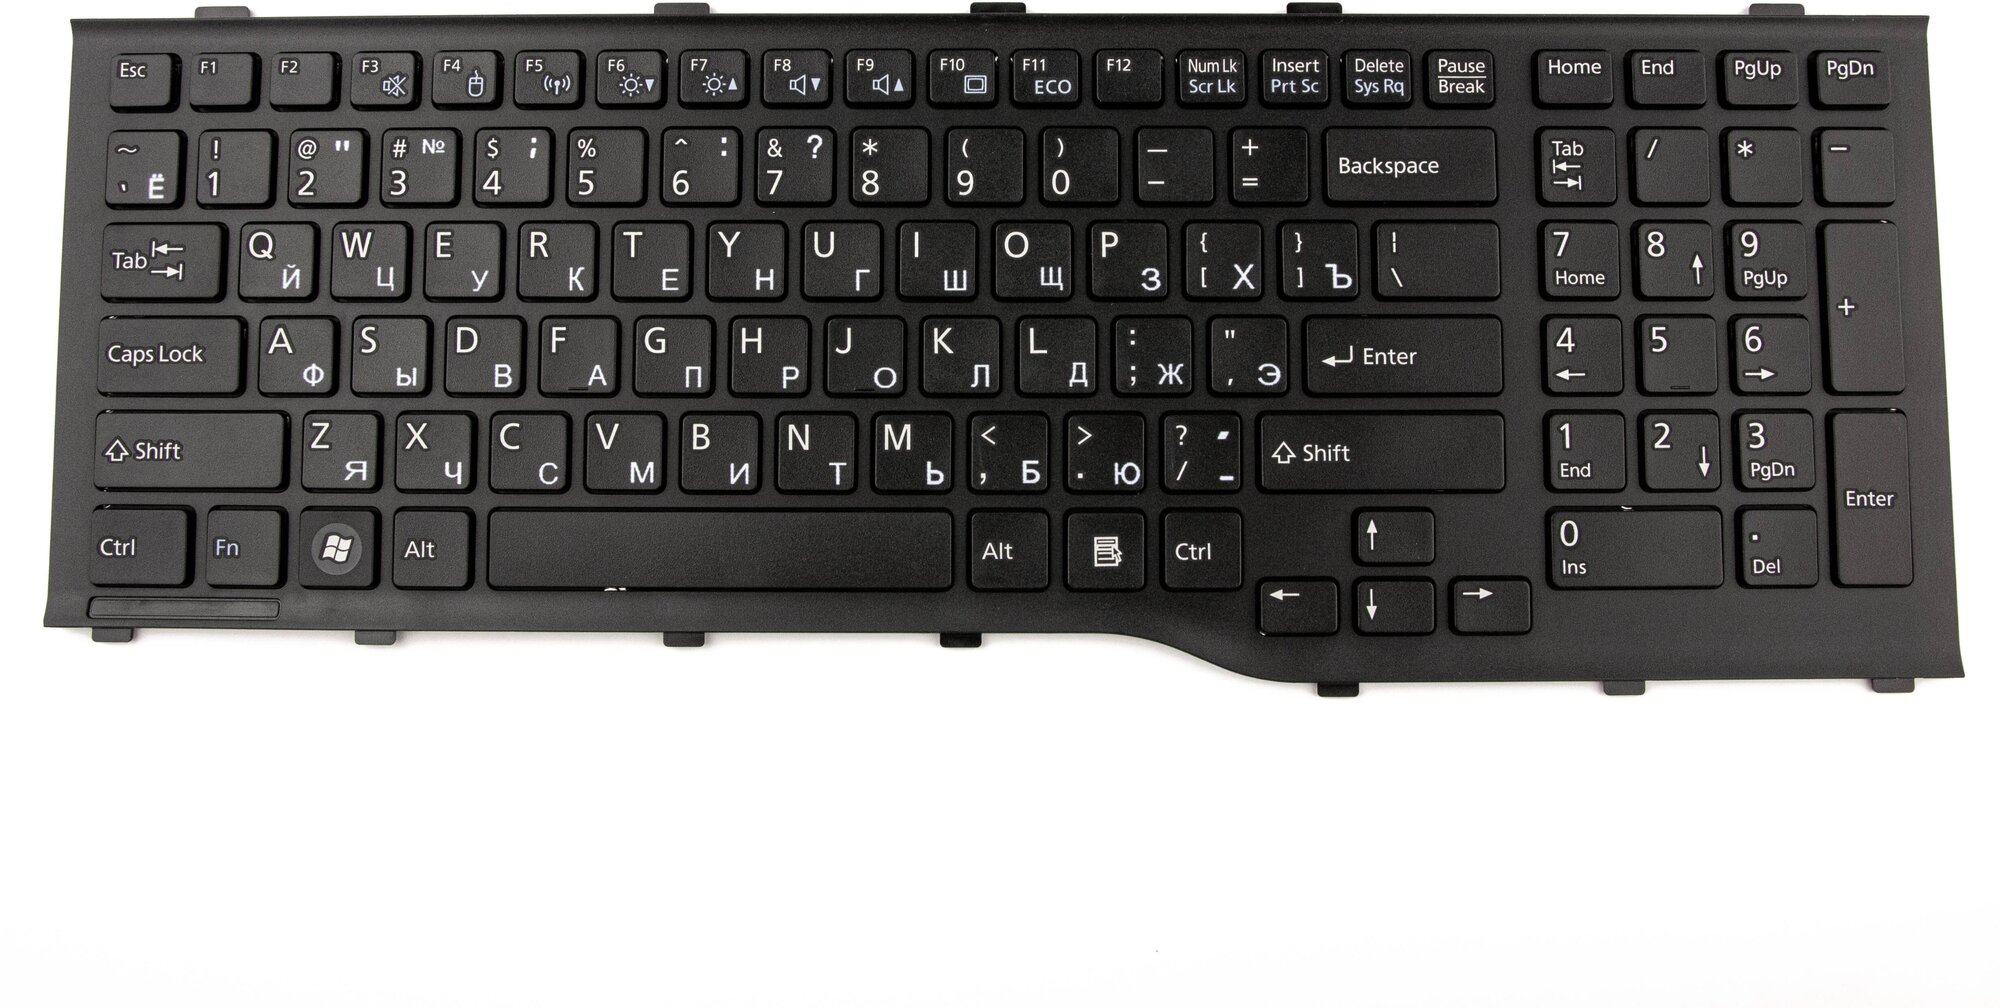 Клавиатура для ноутбука Fujitsu-Siemens Lifebook AH532 A532 N532 NH532 p/n: CP569154-01